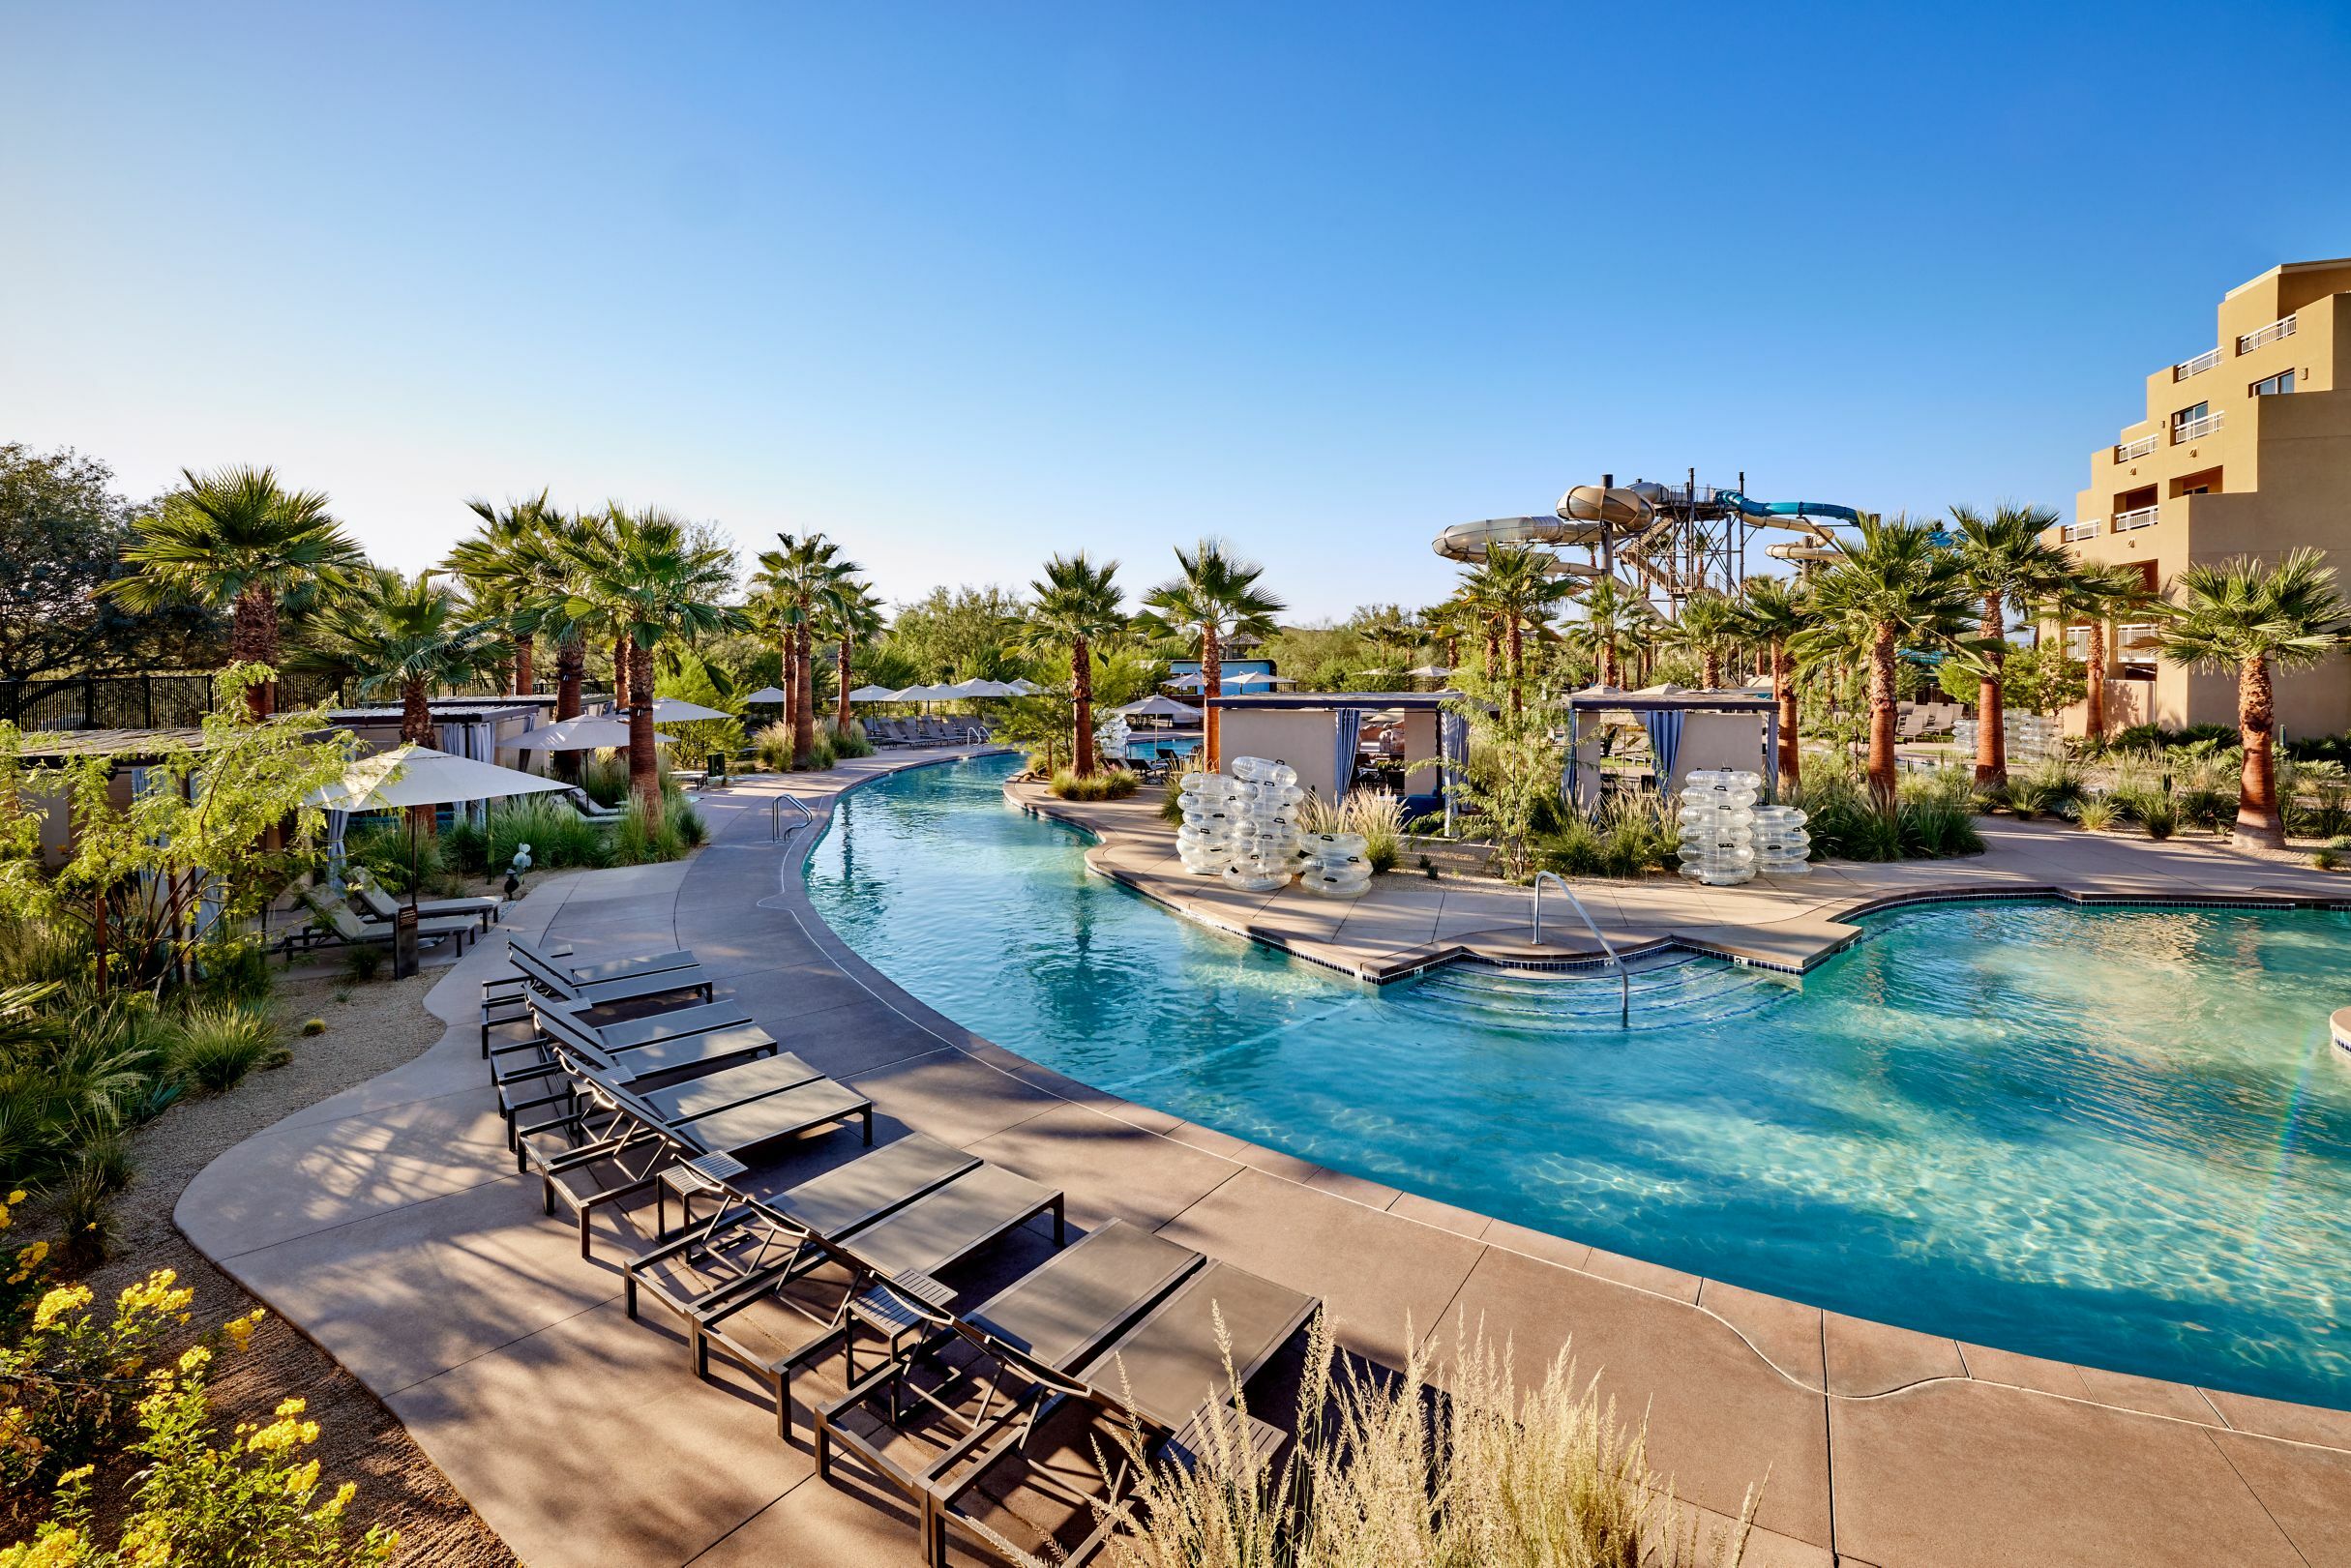 Photo of JW Marriott Phoenix Desert Ridge Resort & Spa, Phoenix, AZ